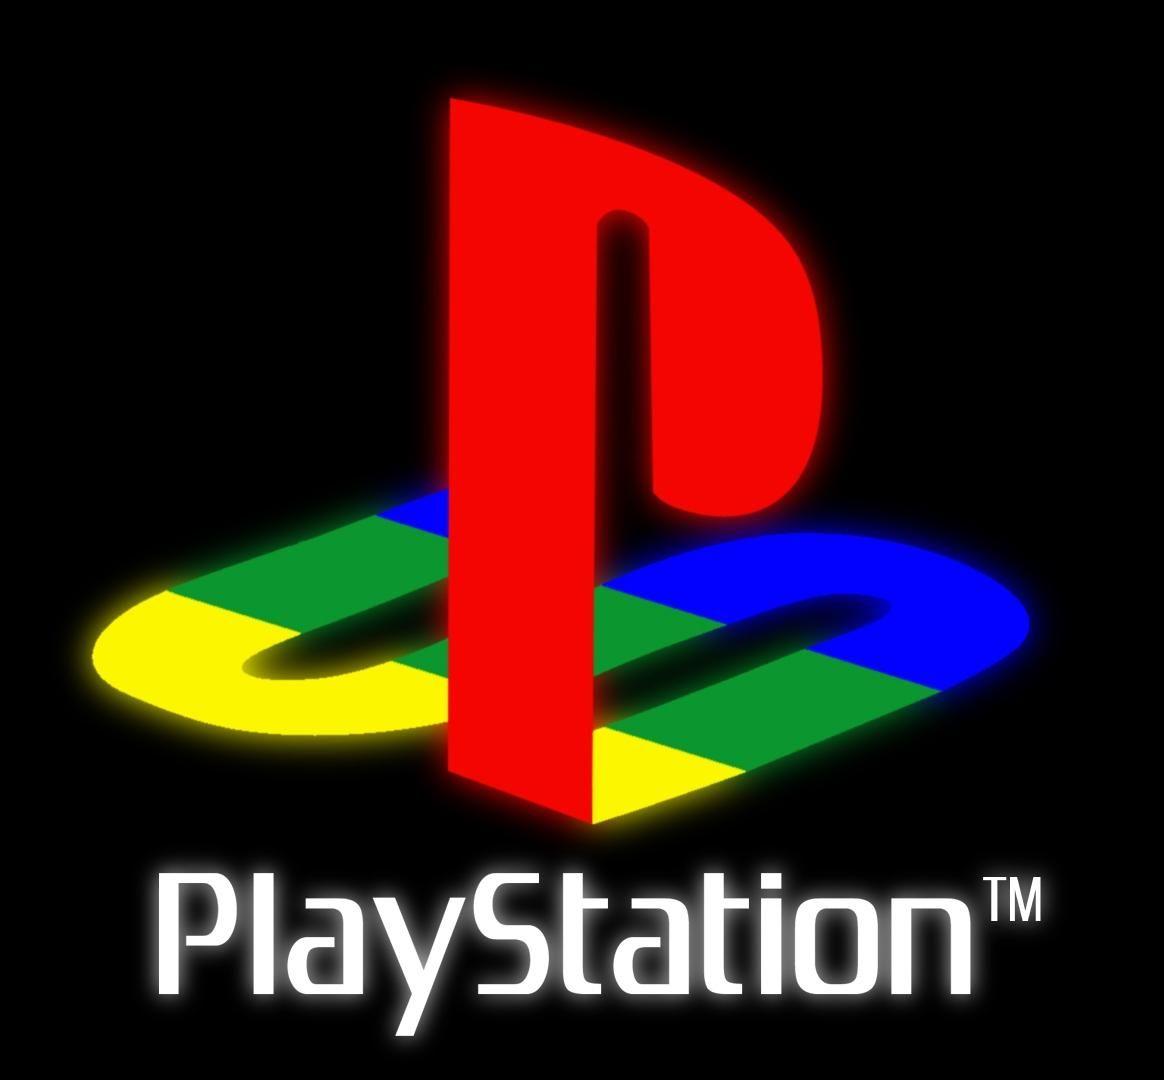 Sony PlayStation 4 Logo - Live Stream: Sony PlayStation 4 Event in New York City